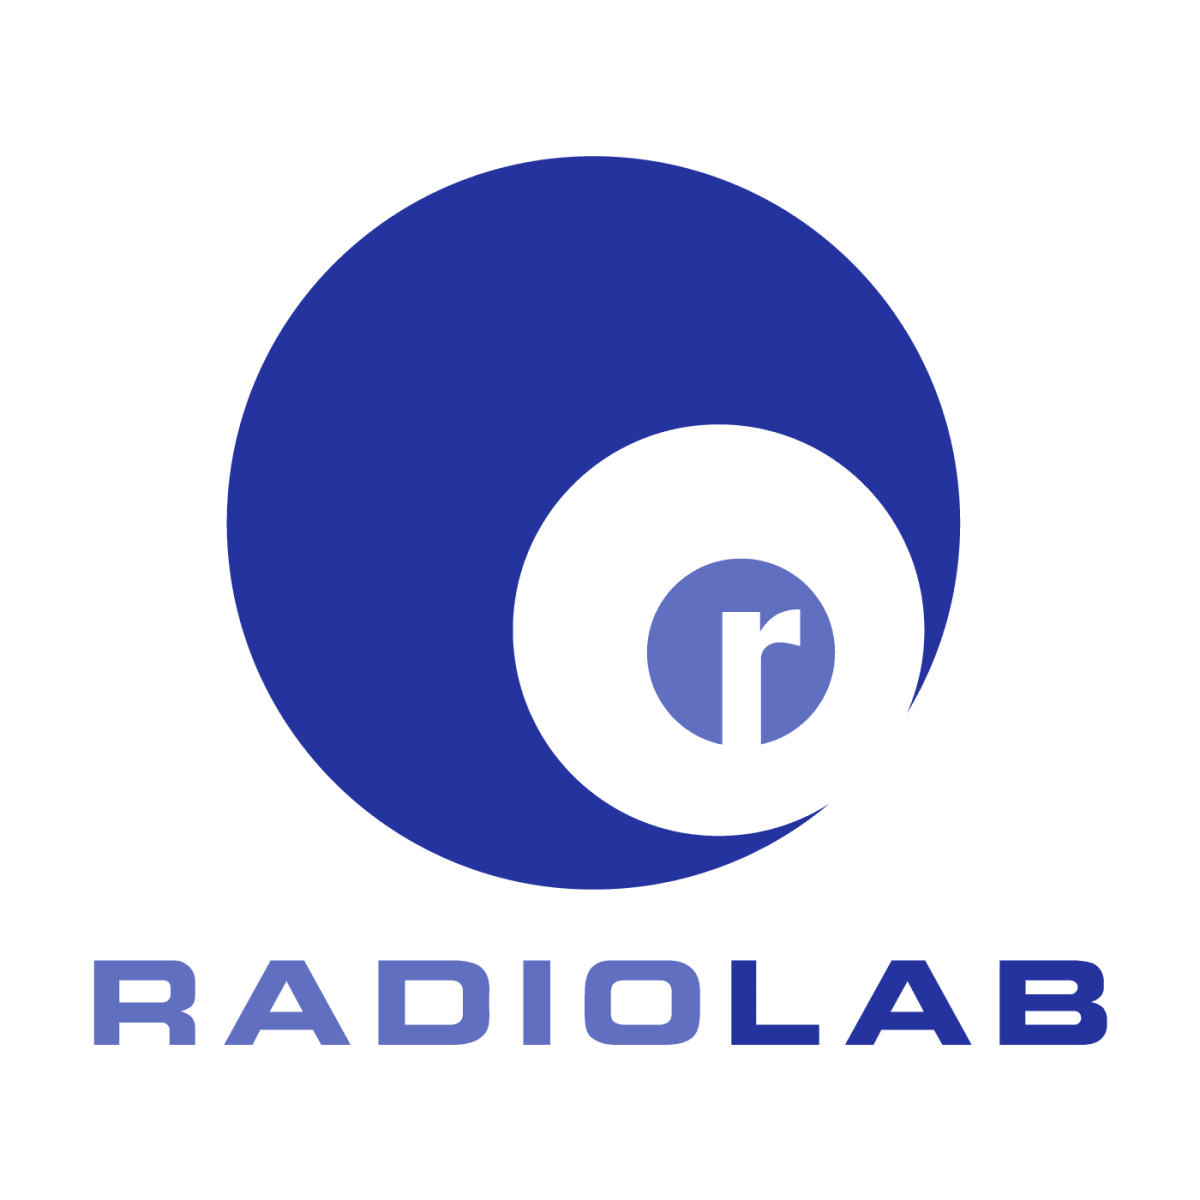 3) RadioLab